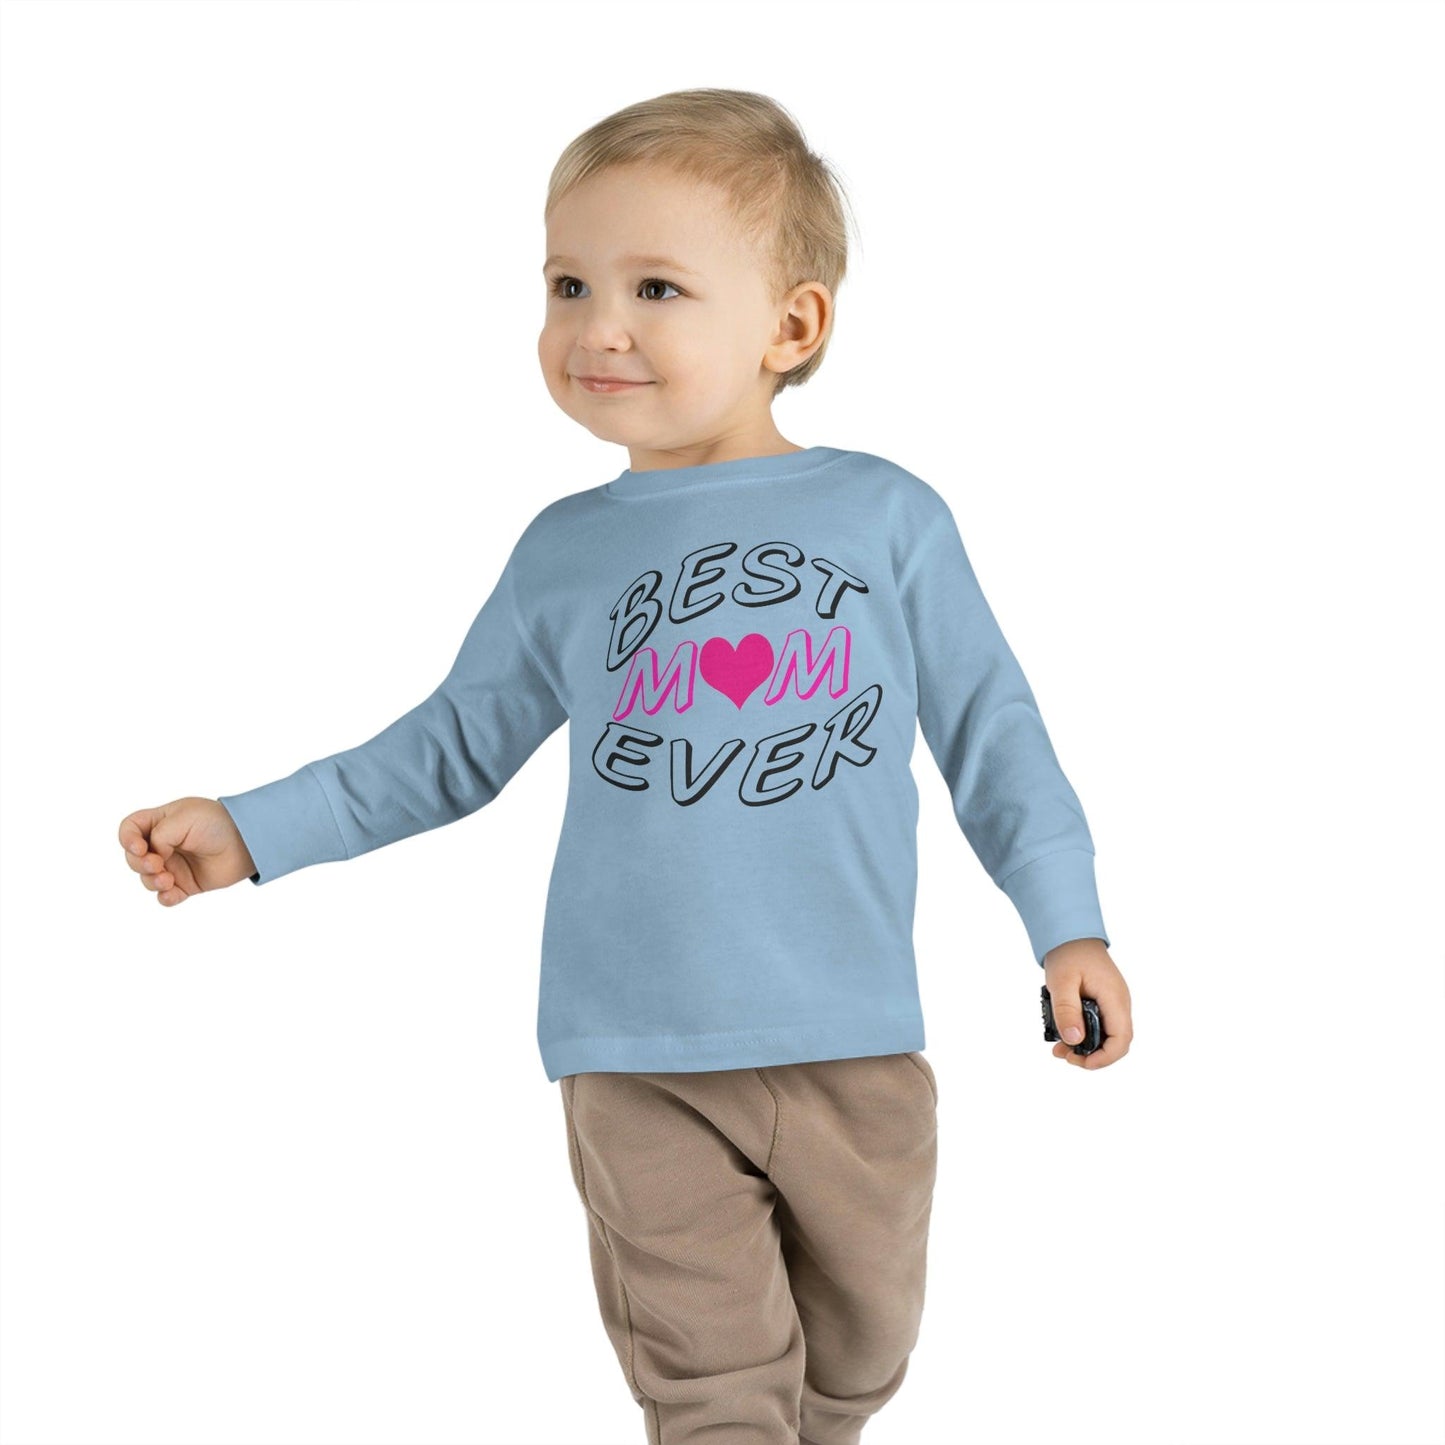 Best Mom Ever toddler long-sleeve tee - Toddler shirt